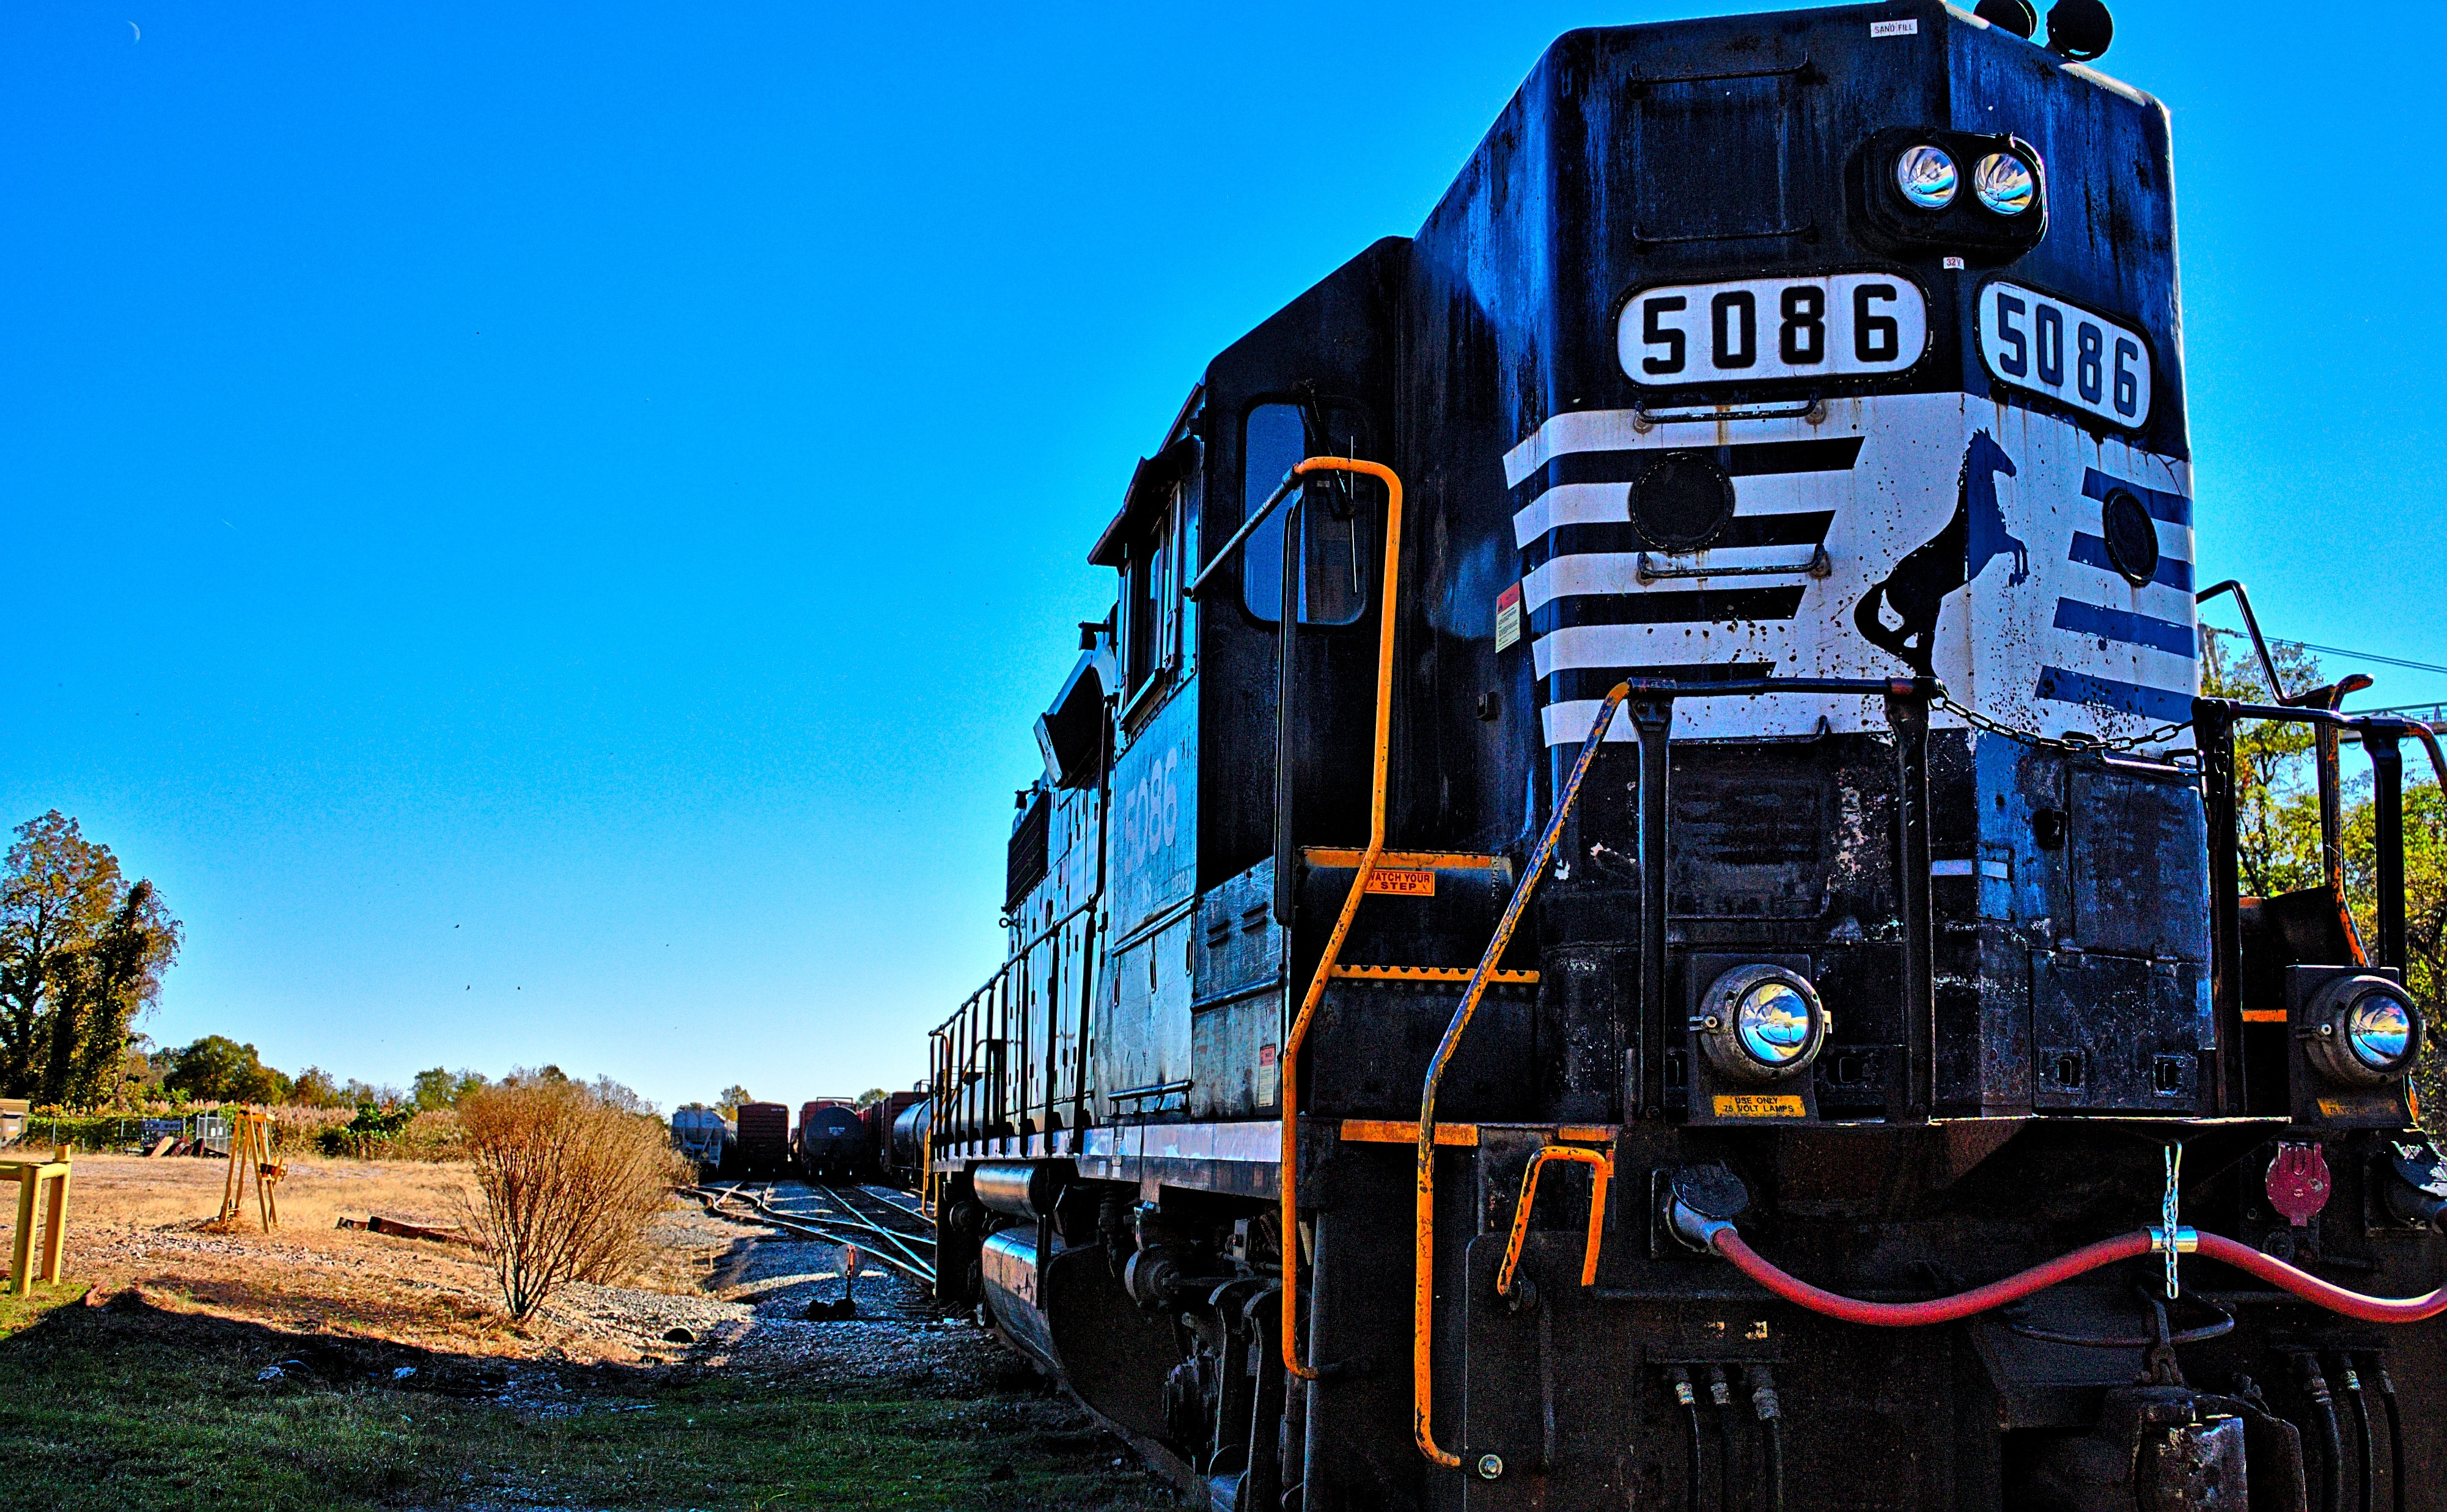 black 5086 train